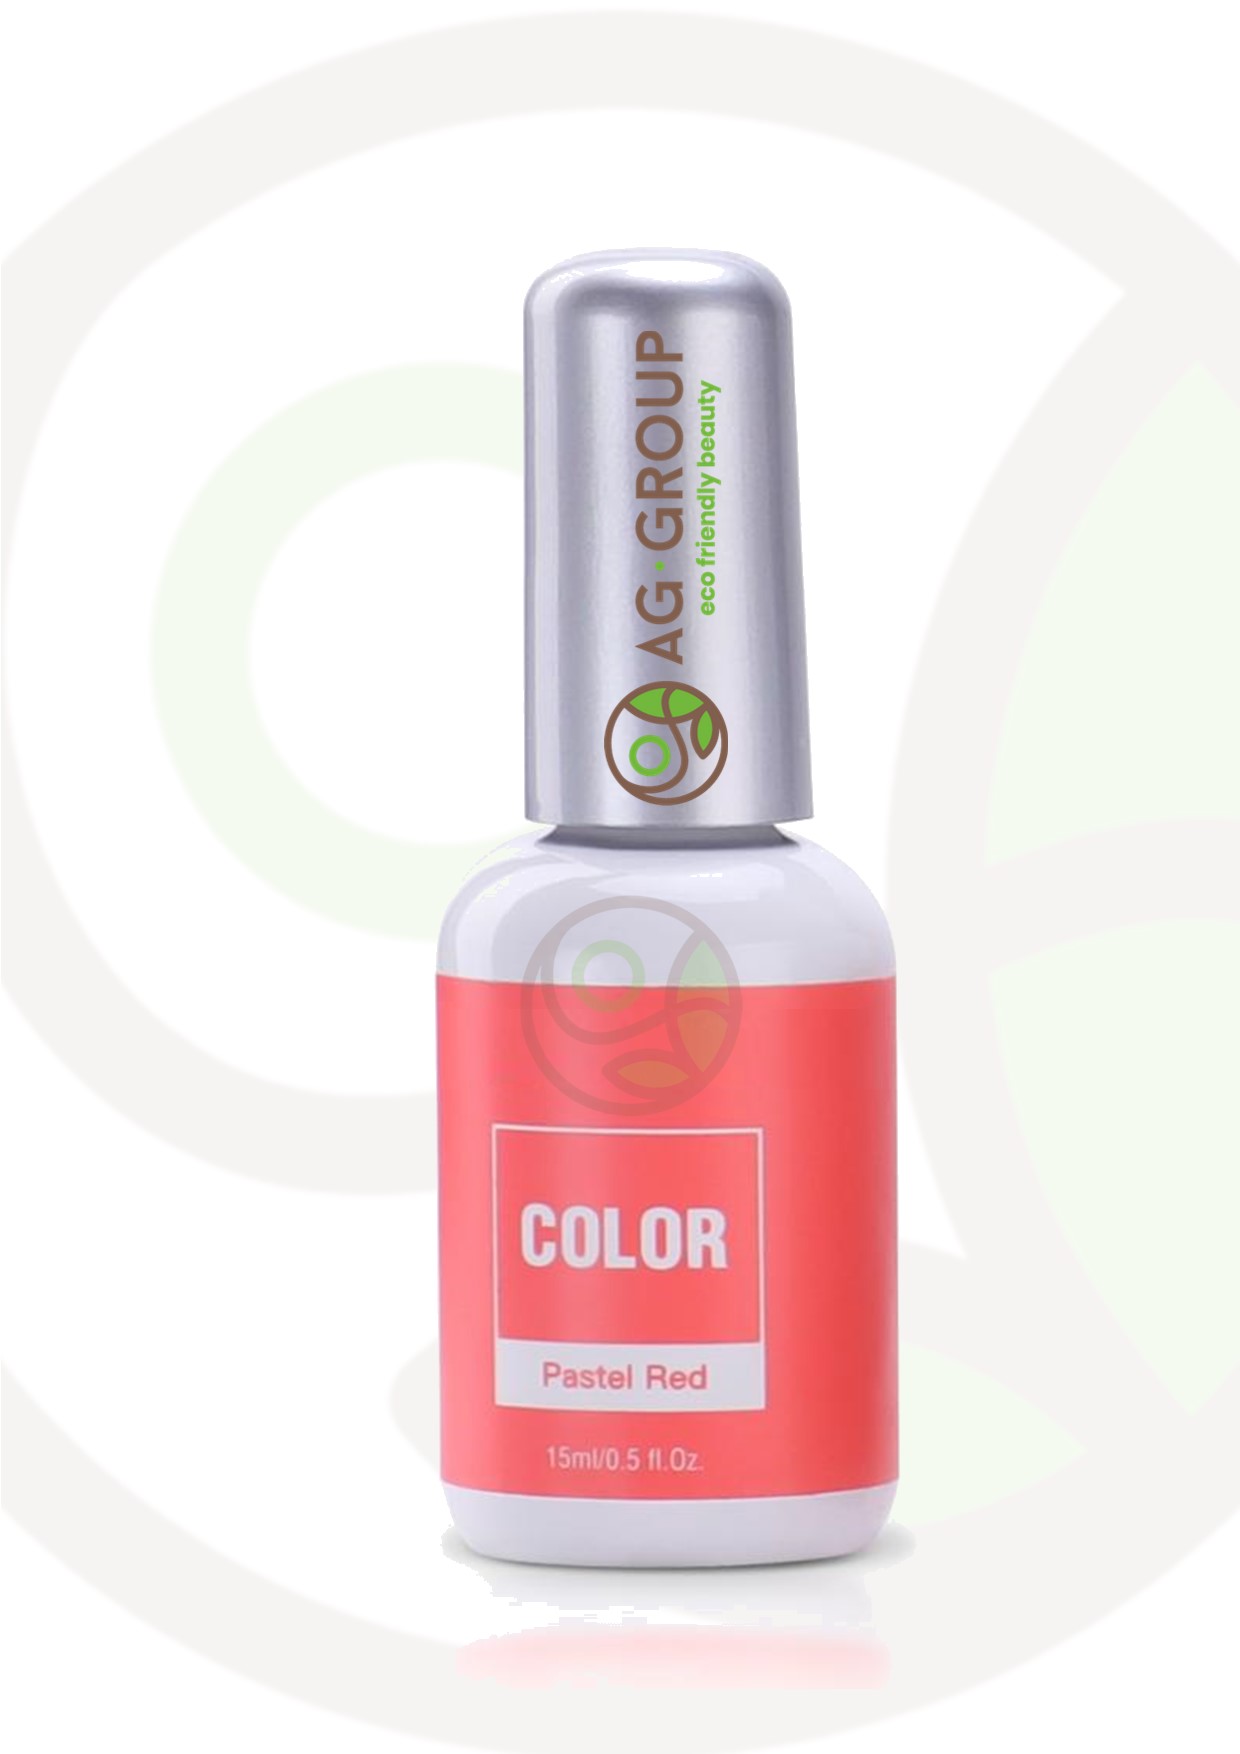 Featured image for “Gel polish soak -off led/uv-pastel red”